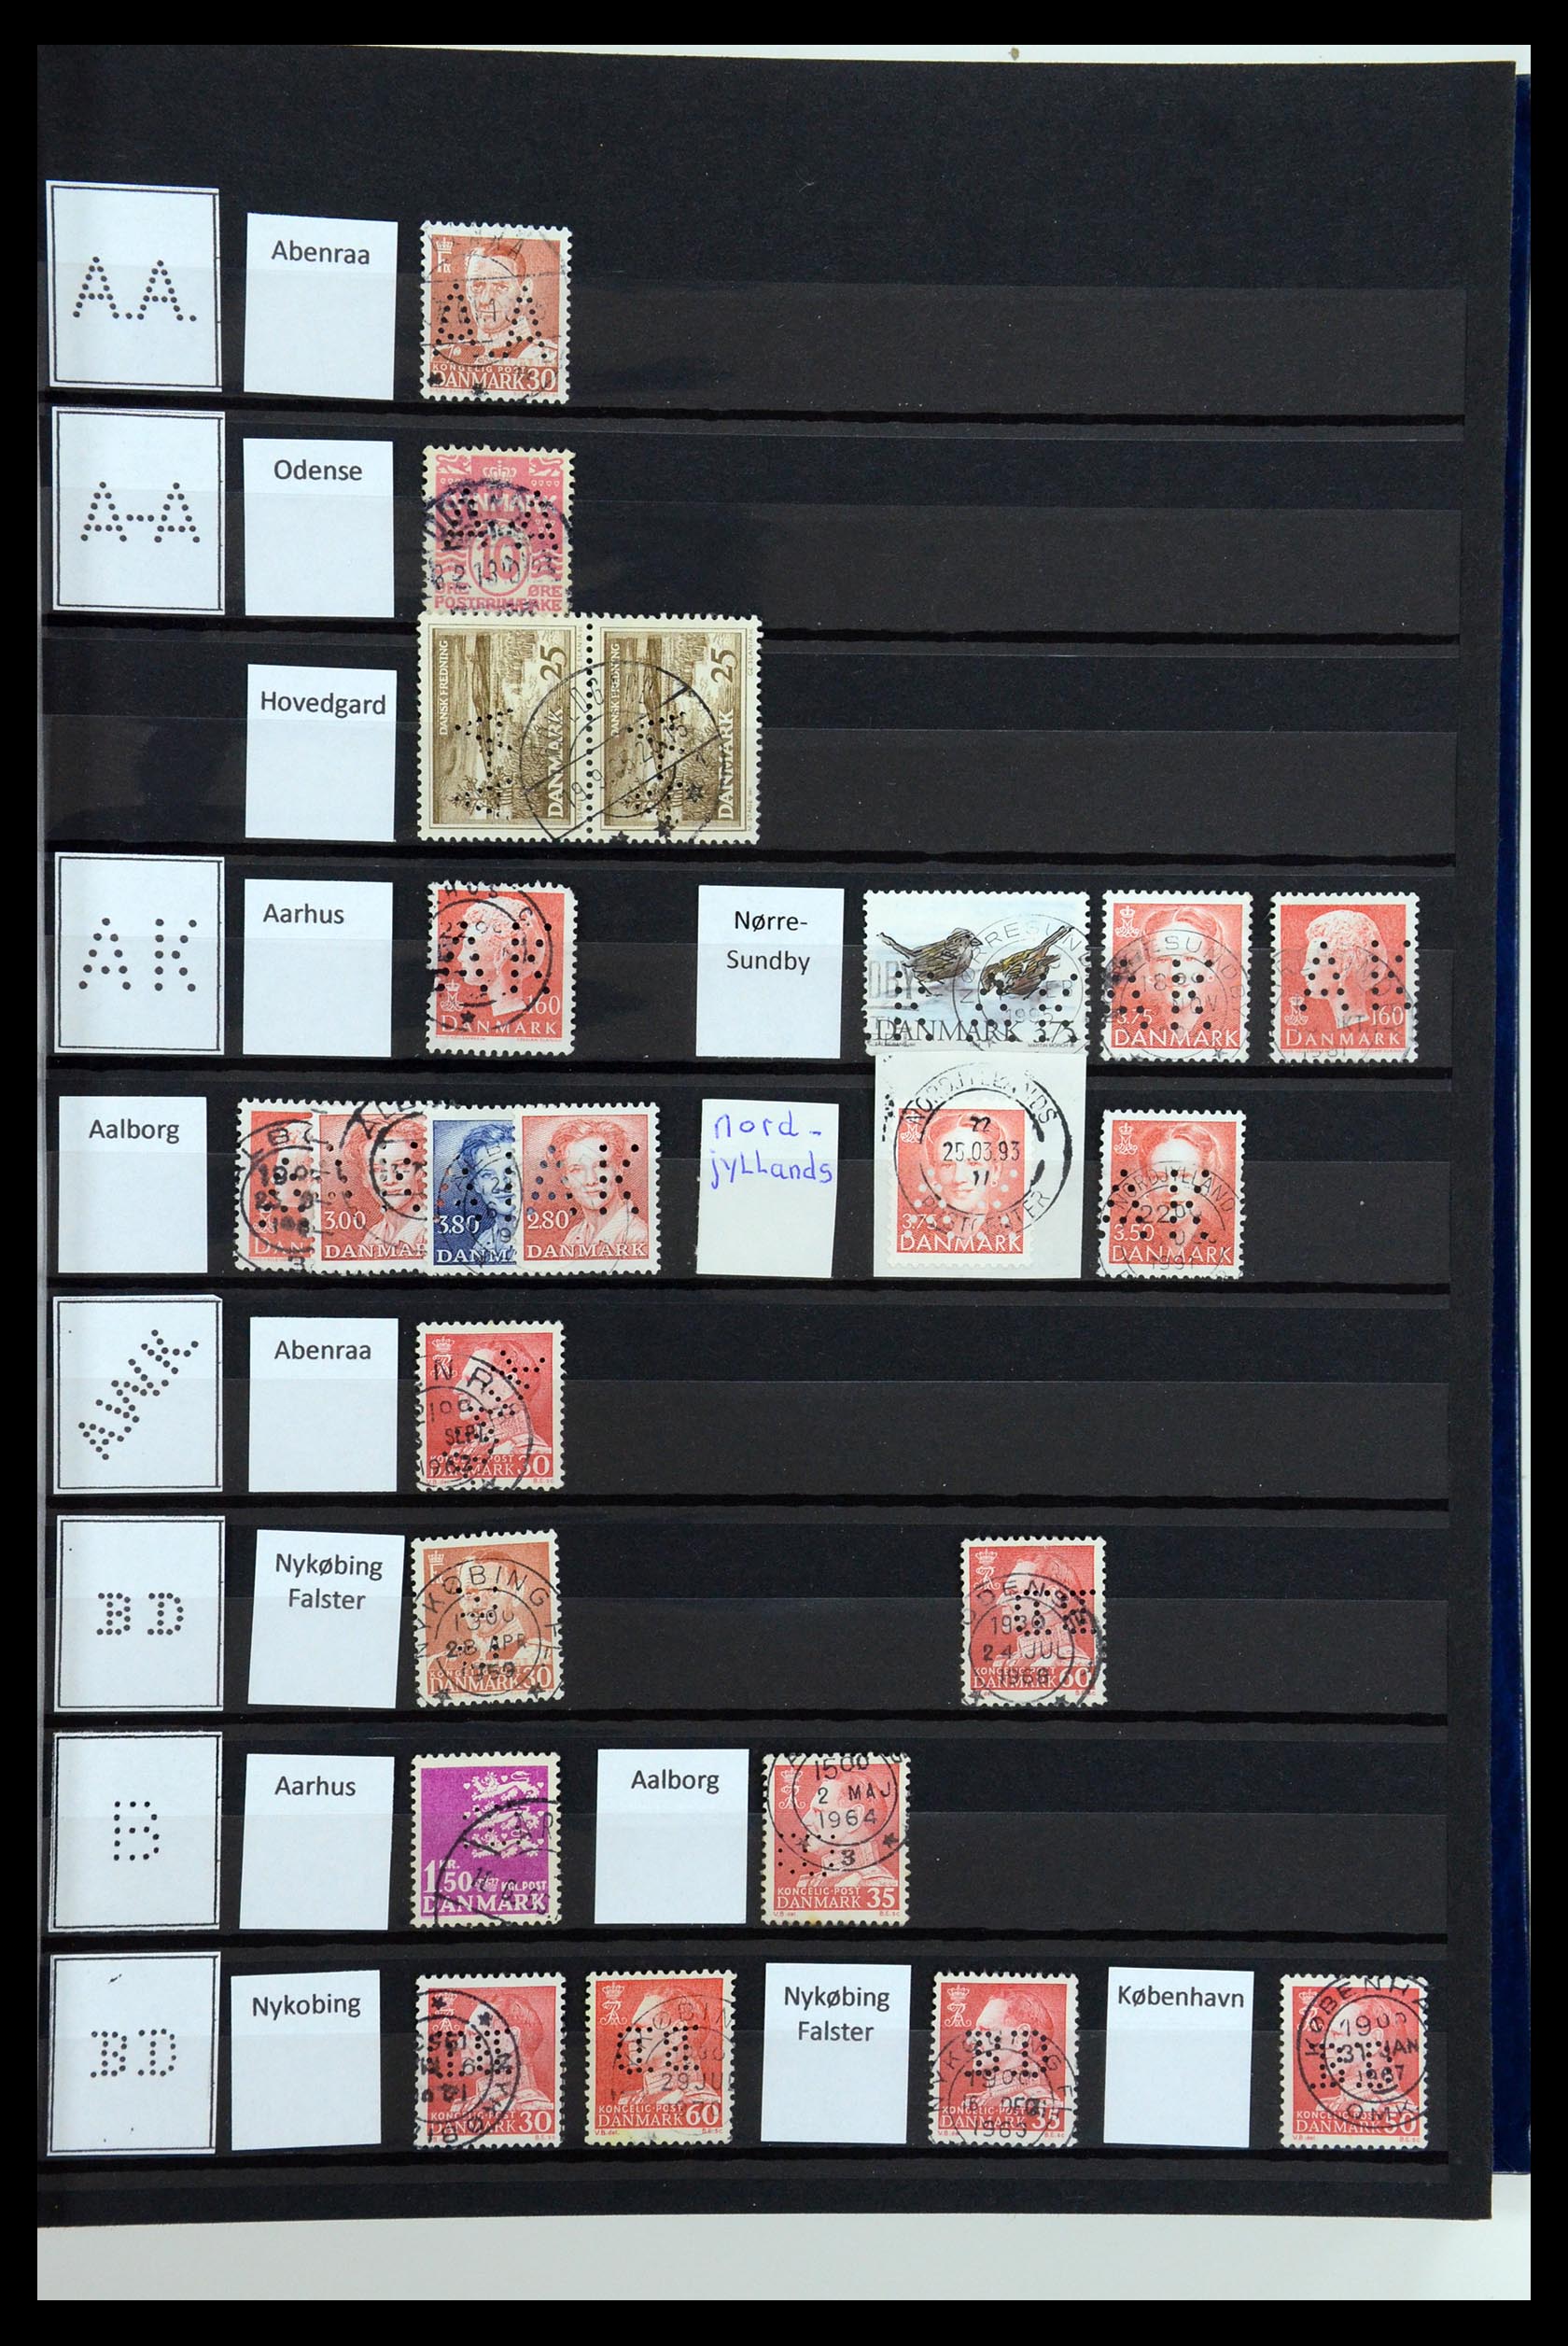 36396 060 - Stamp collection 36396 Denmark perfins.